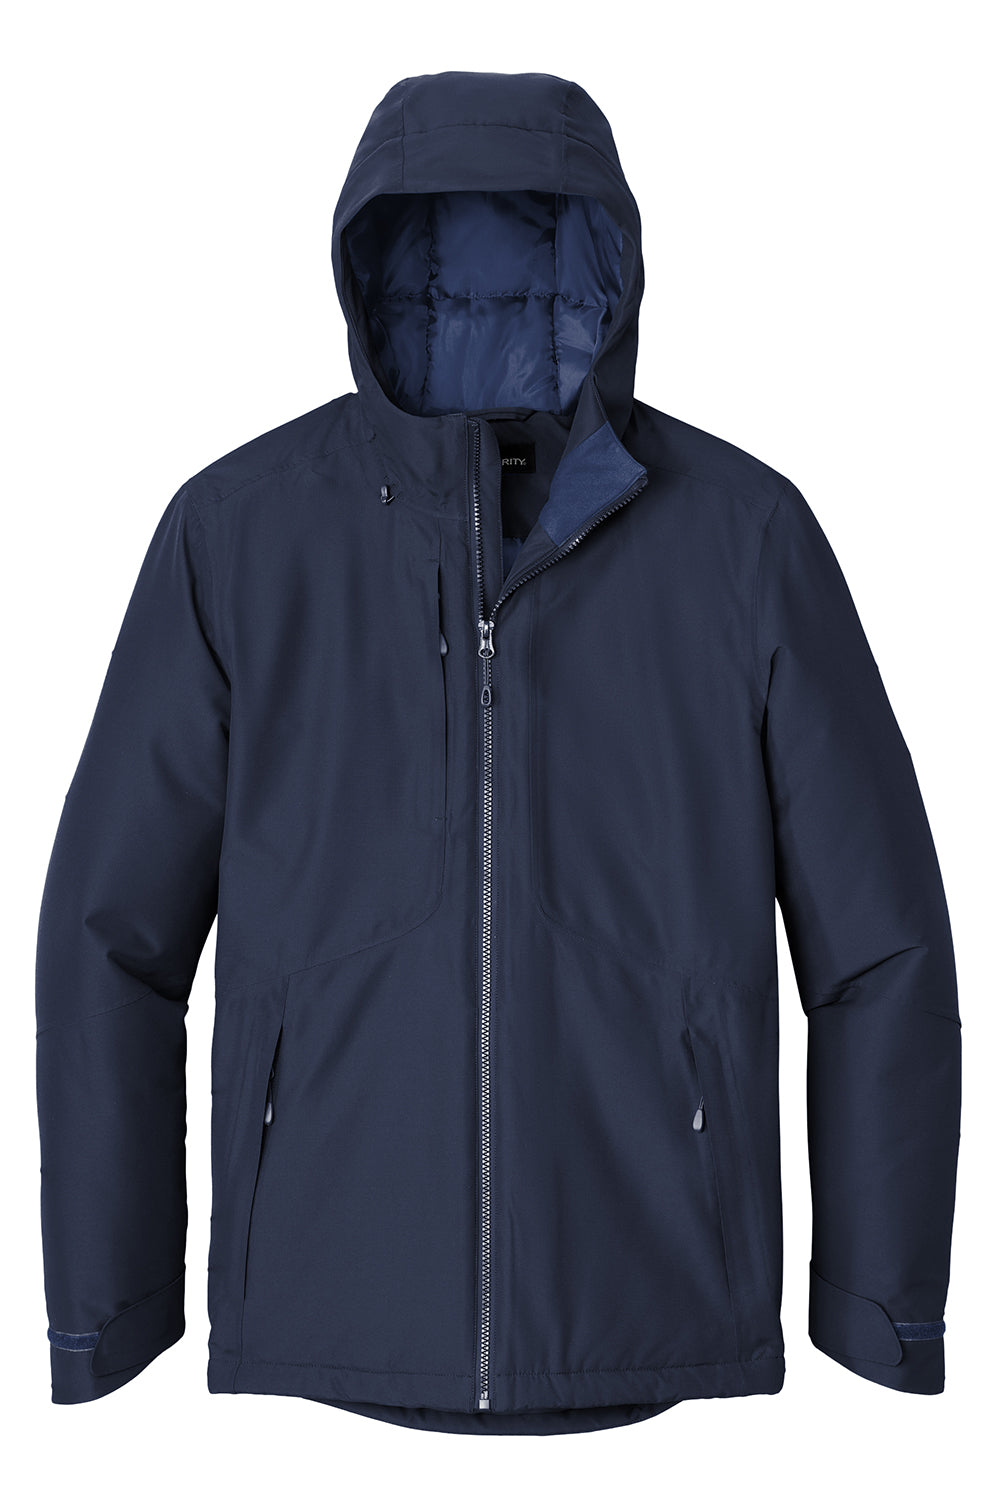 Port Authority J362 Mens Venture Waterproof Insulated Full Zip Hooded Jacket Dress Navy Blue Flat Front